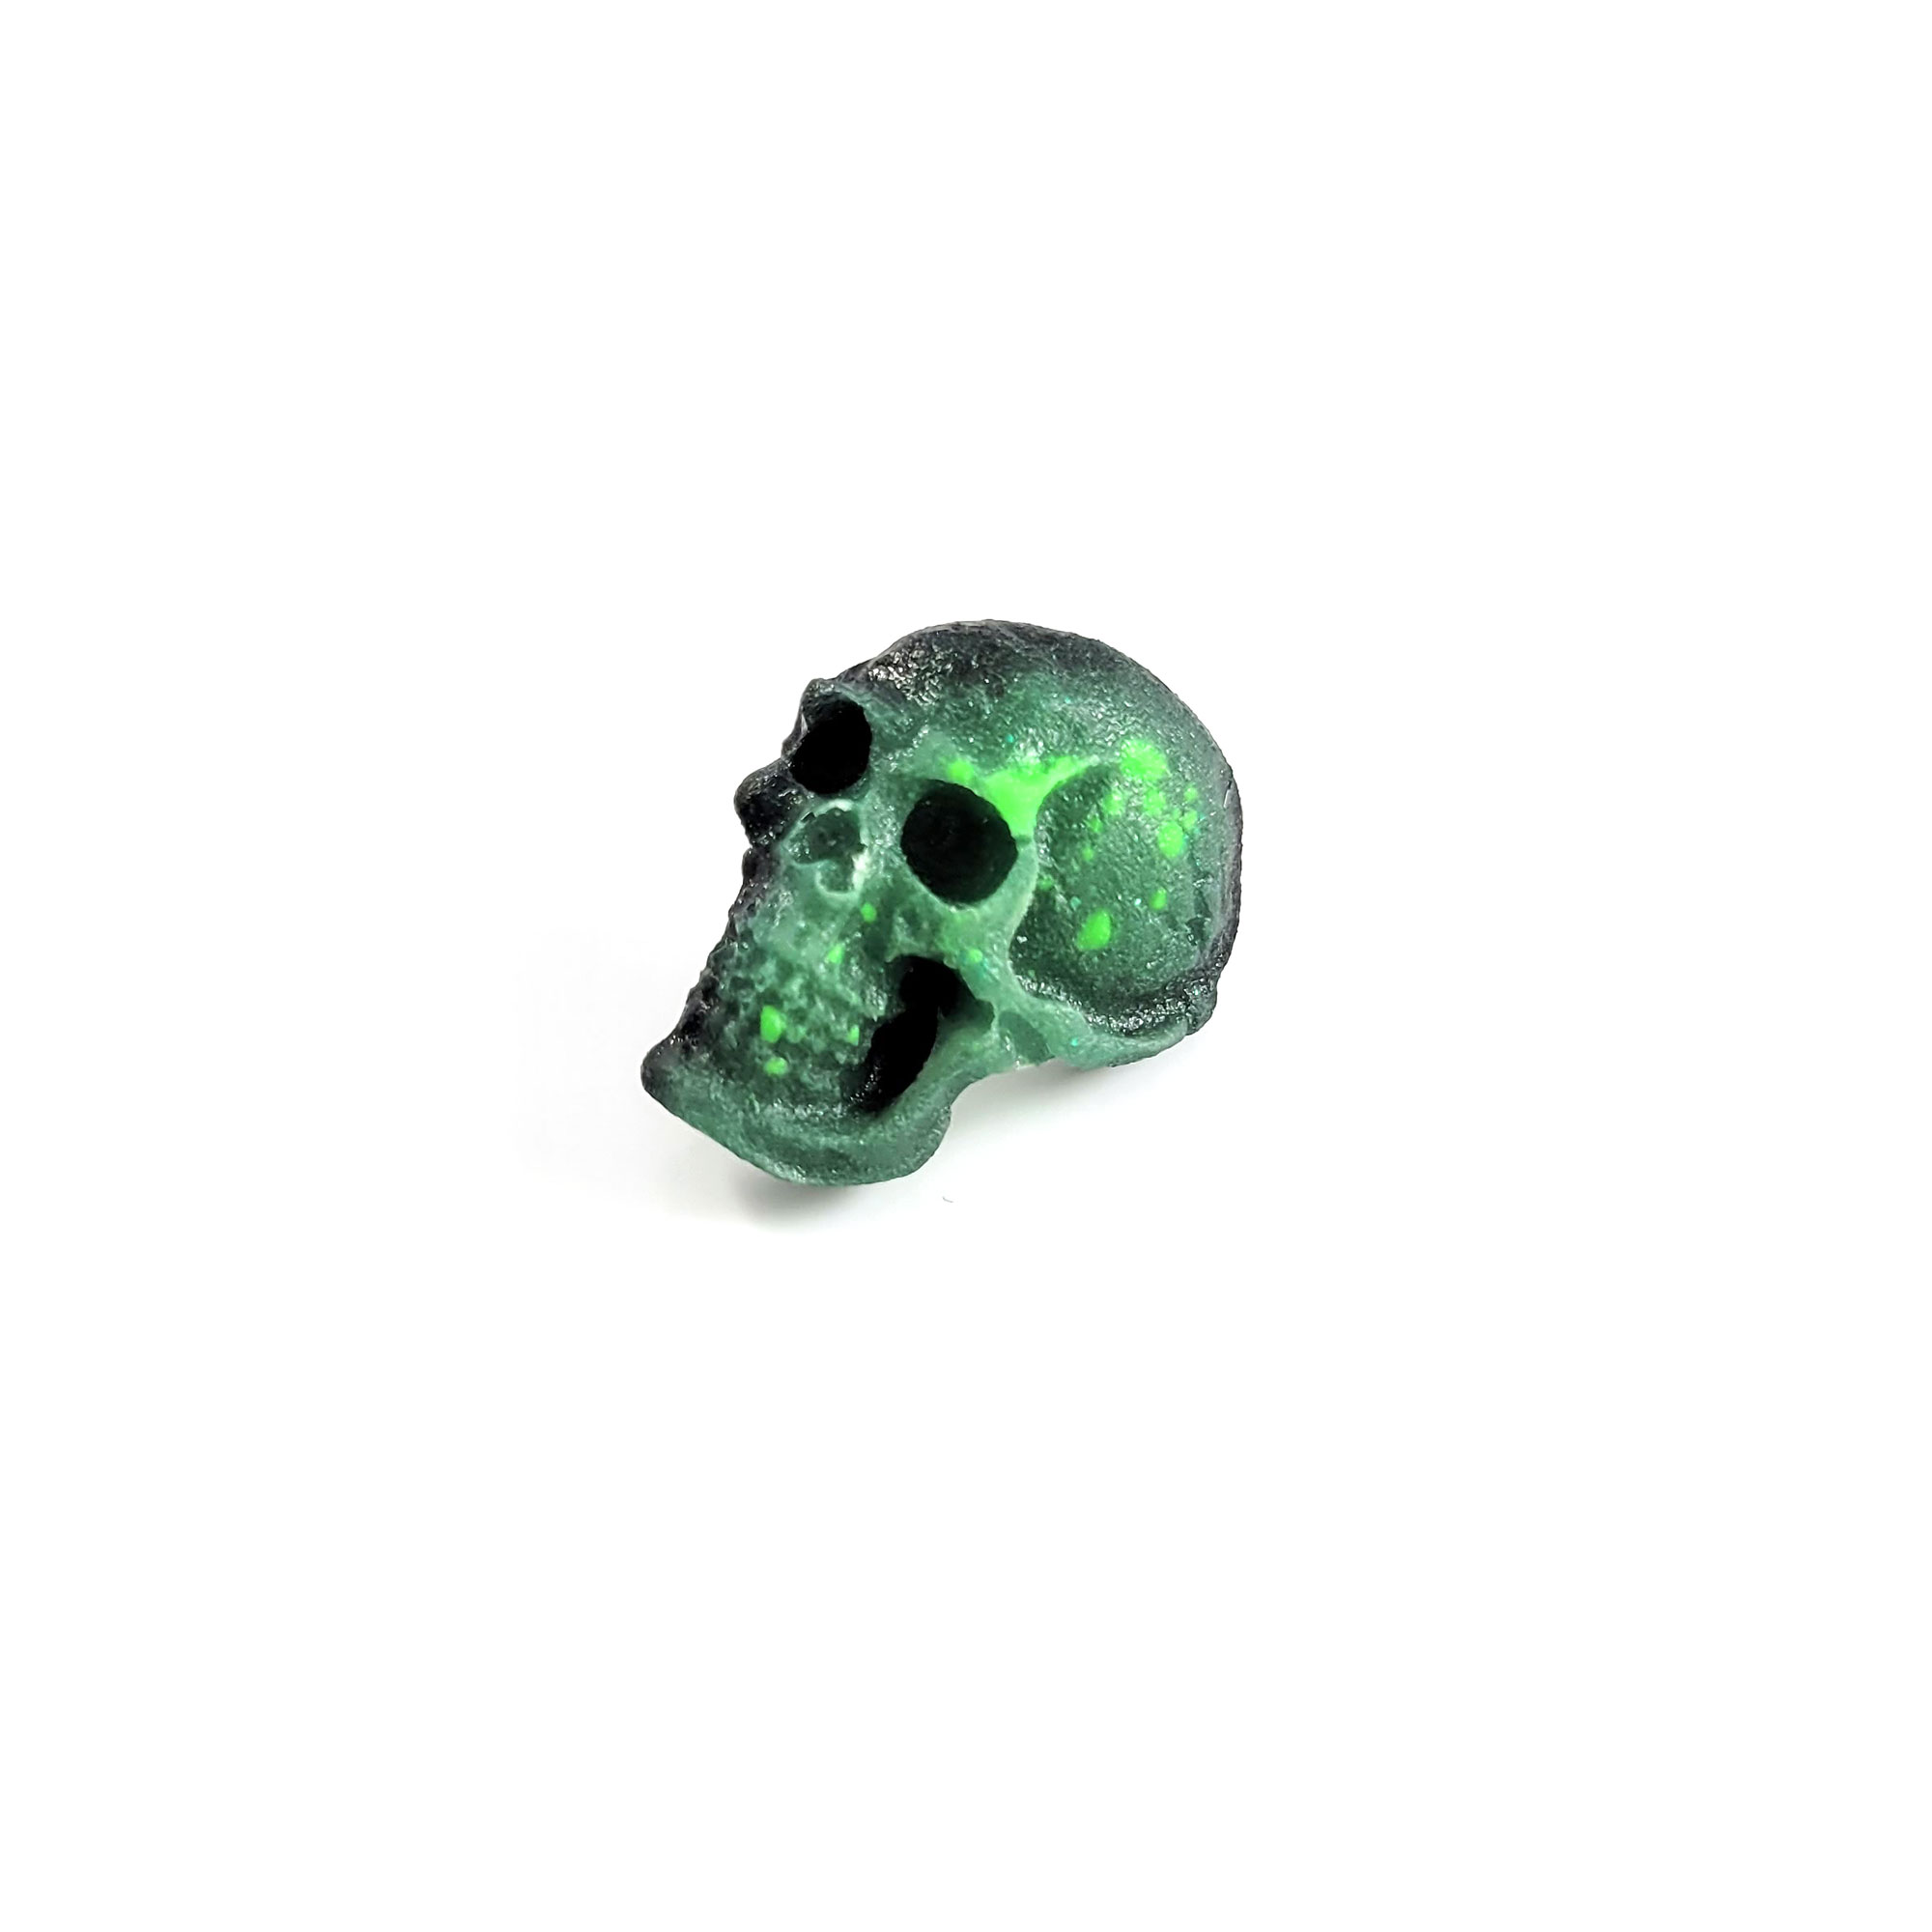 Glow in the Dark Skull Statement Pin by Wilde Designs